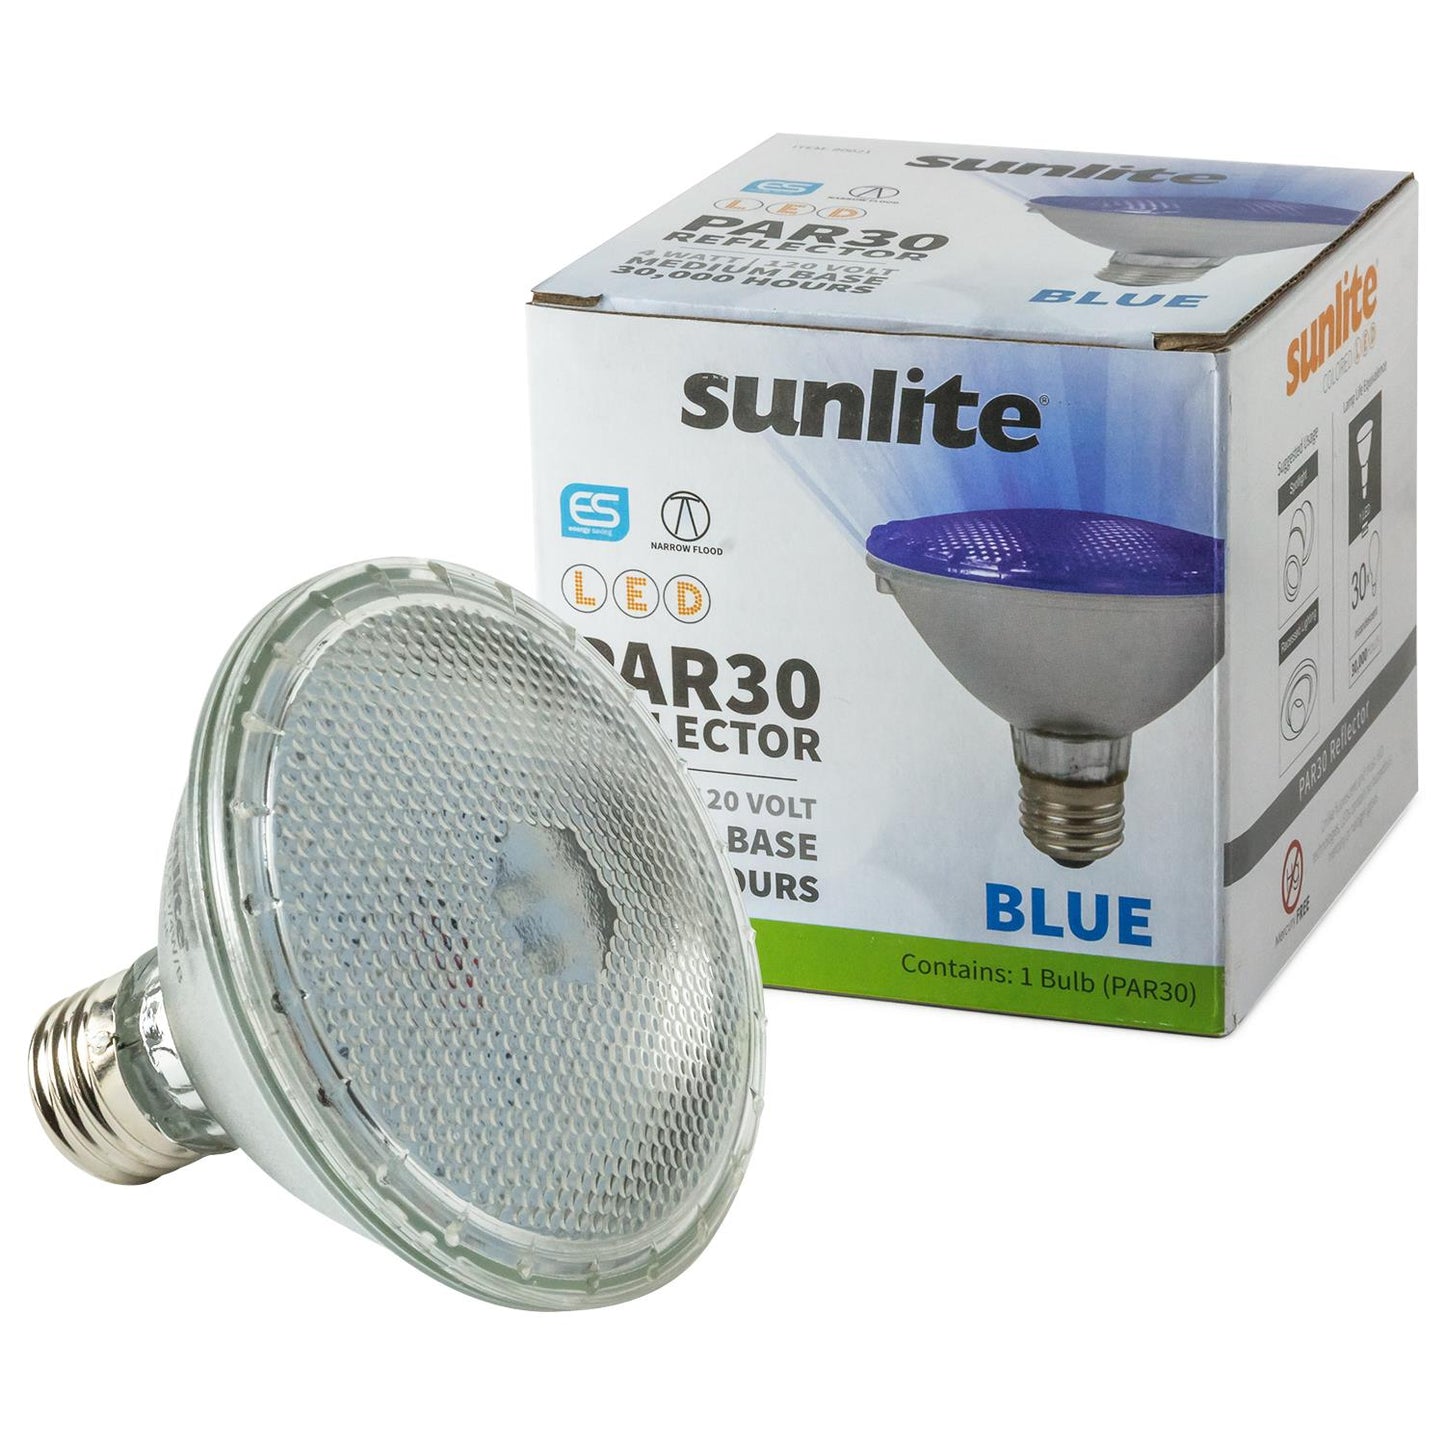 Sunlite LED PAR30 Colored Reflector 4W Light Bulb Medium (E26) Base, Blue